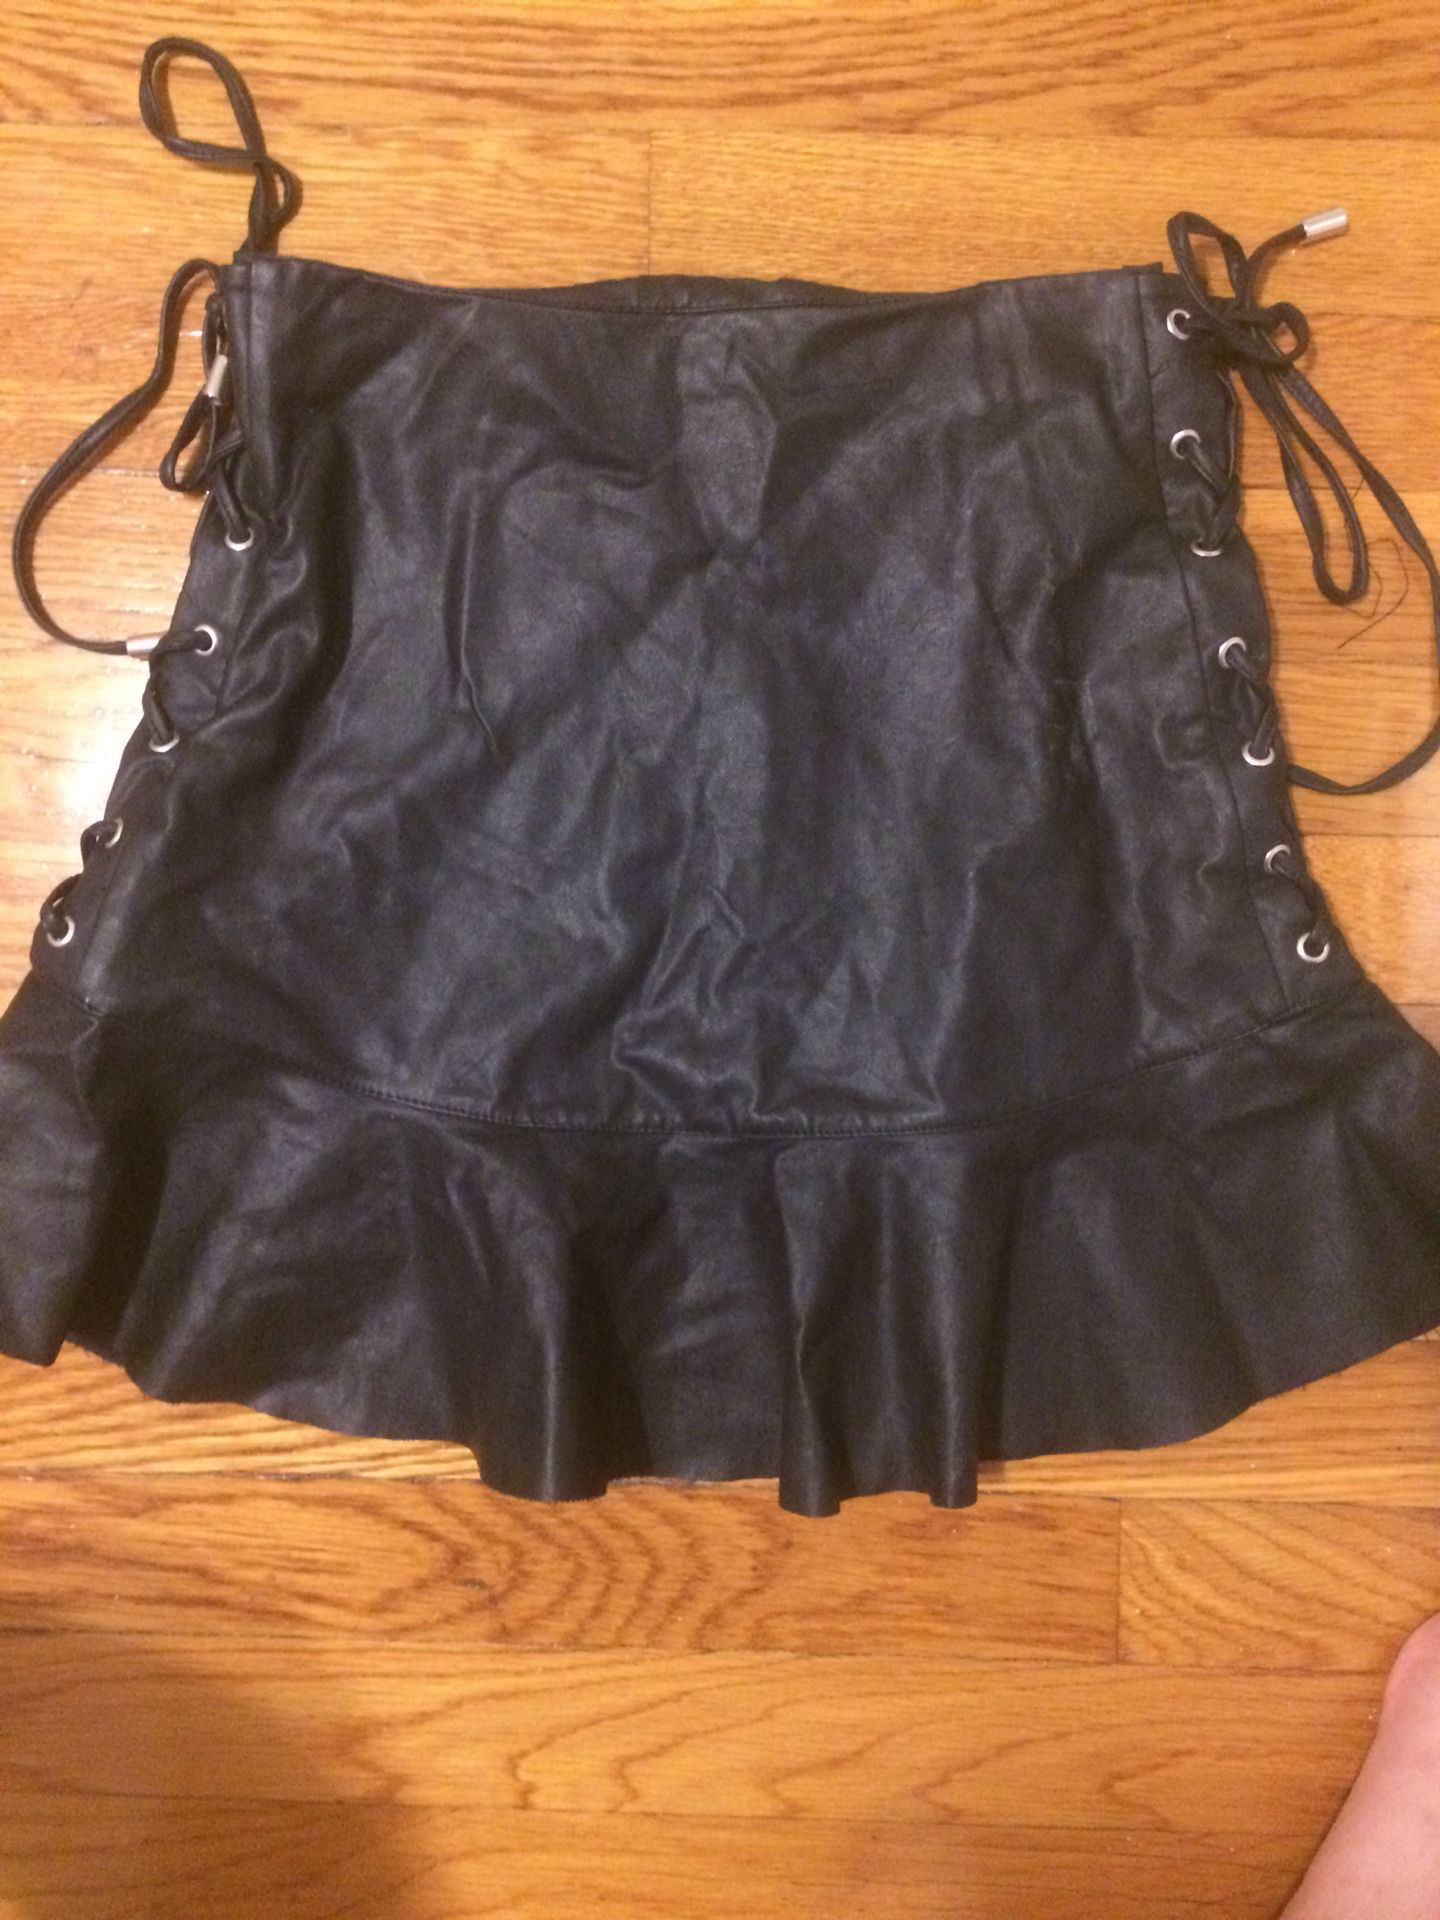 Leathered skirt